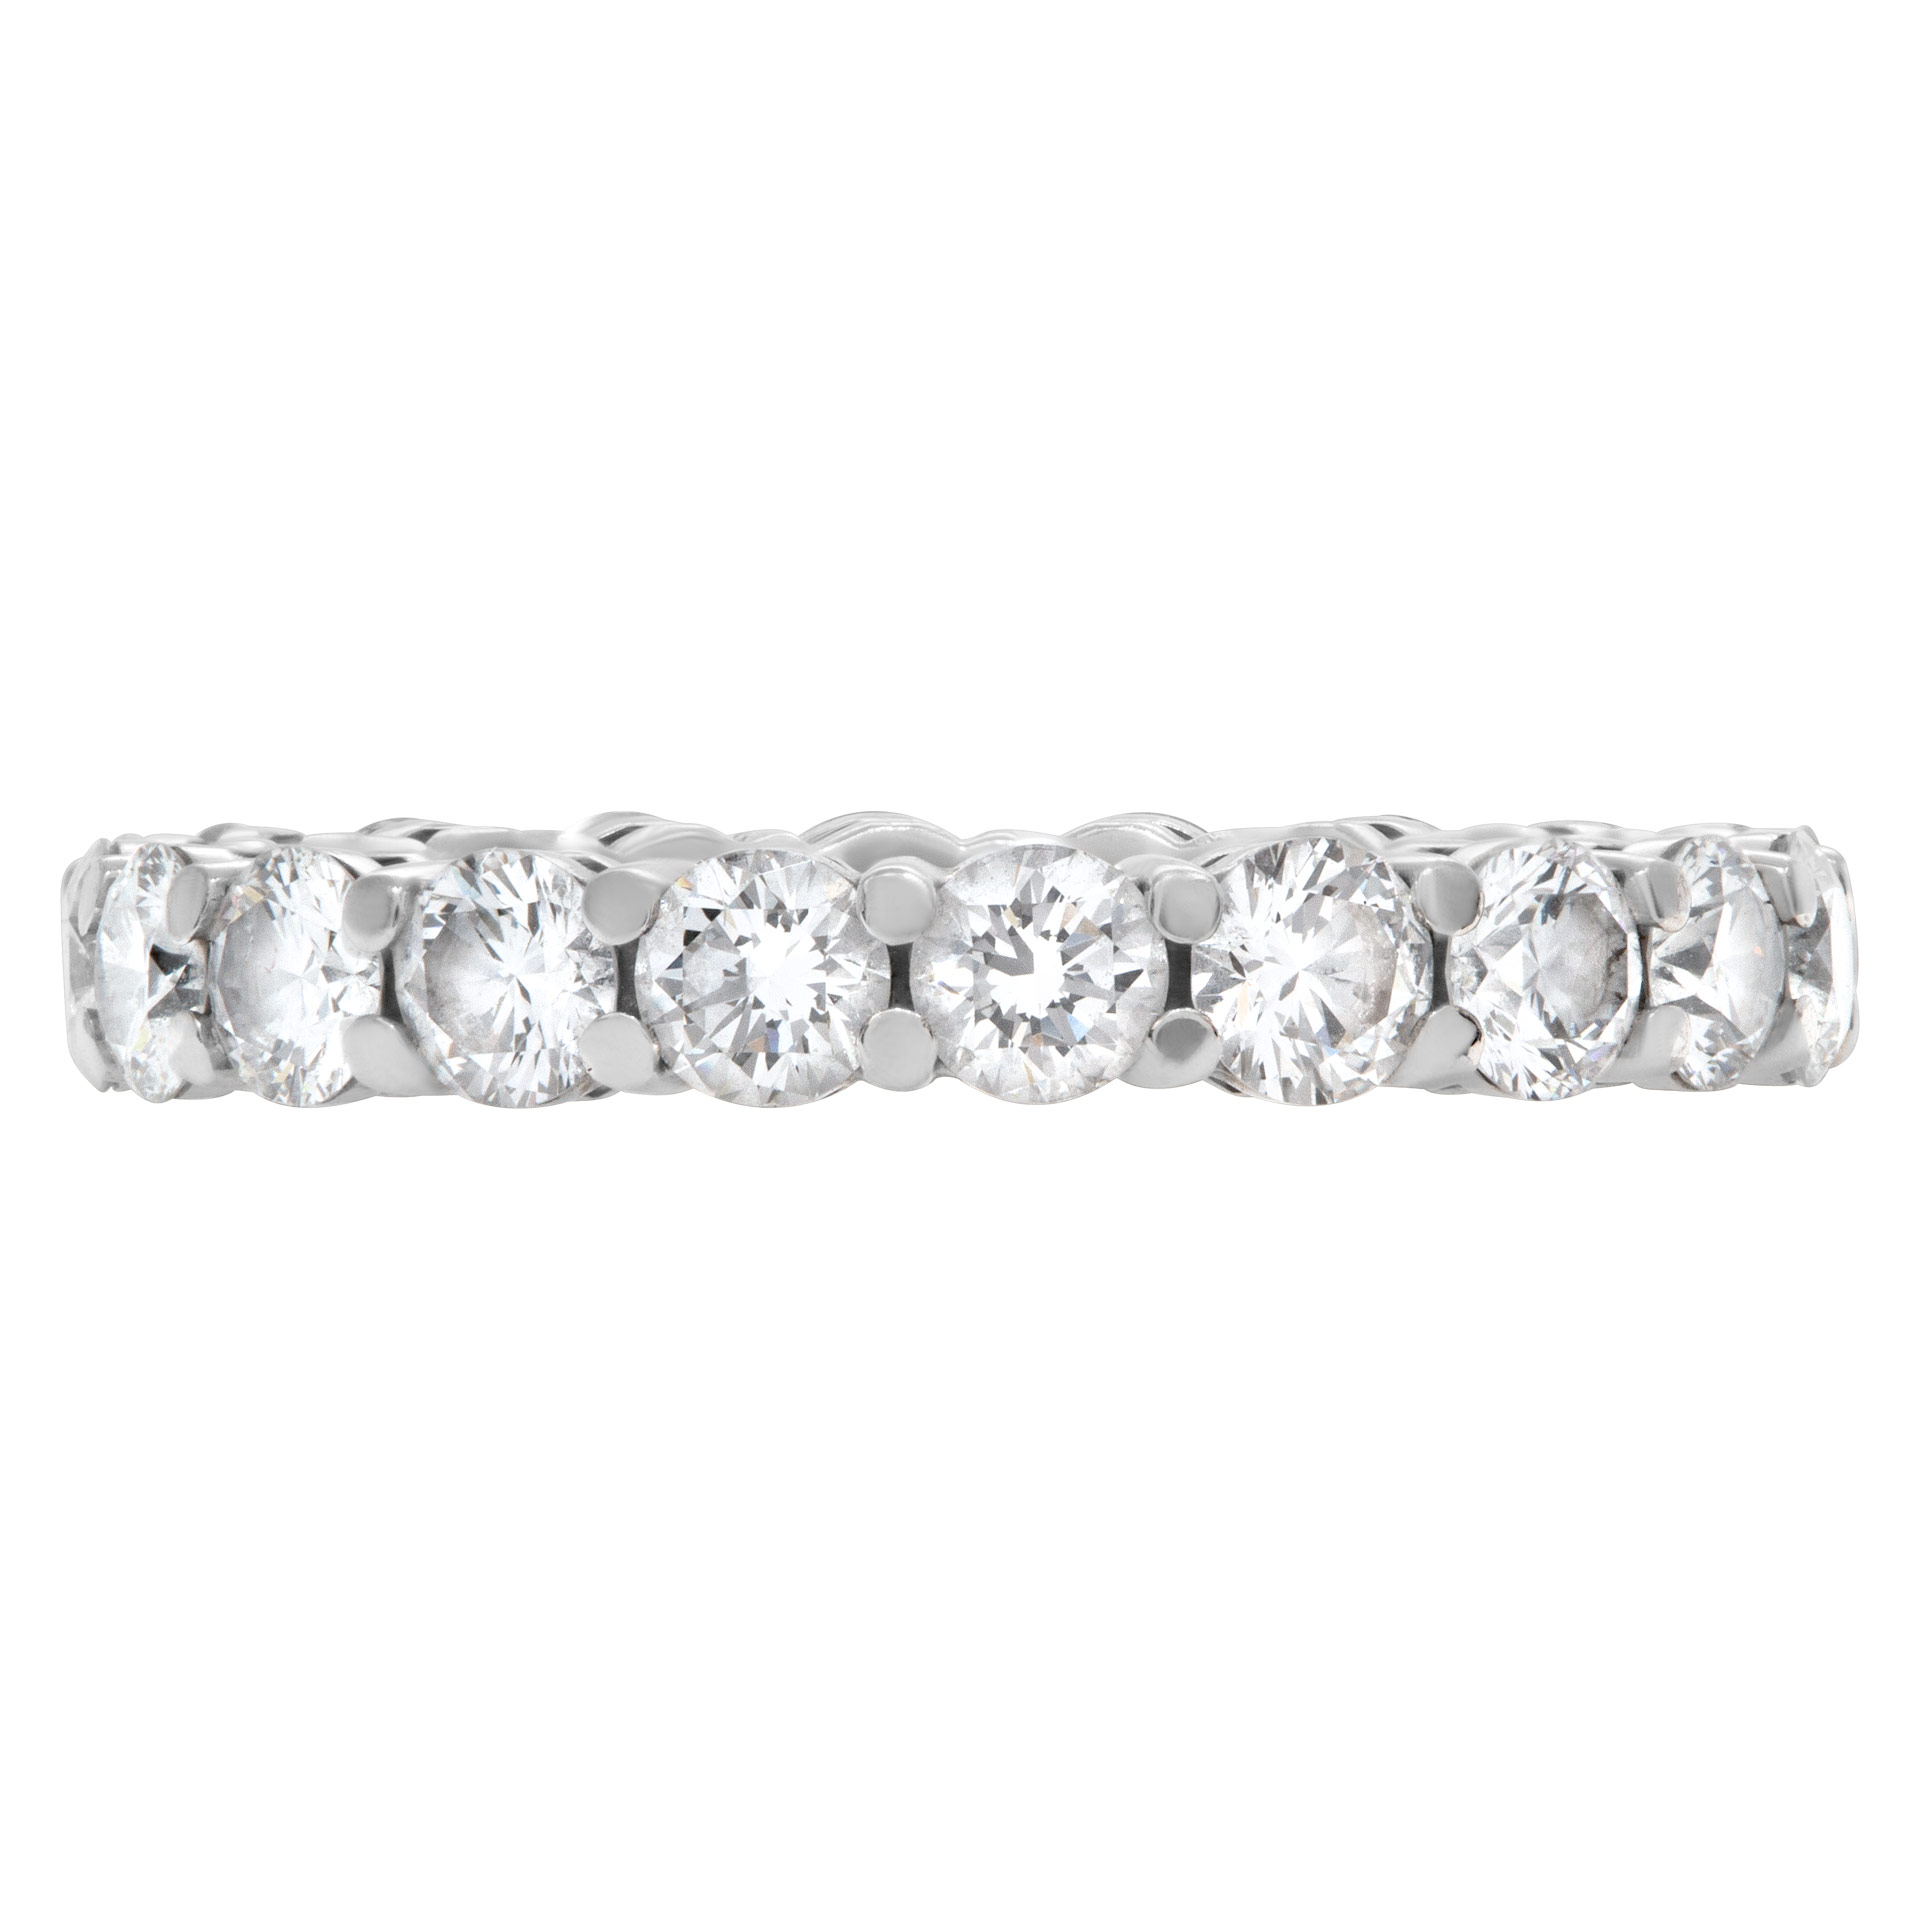 Tiffany & Co. Diamond Eternity Band and Ring platinum ring with 1.80 carat full cut round brilliant diamonds image 2